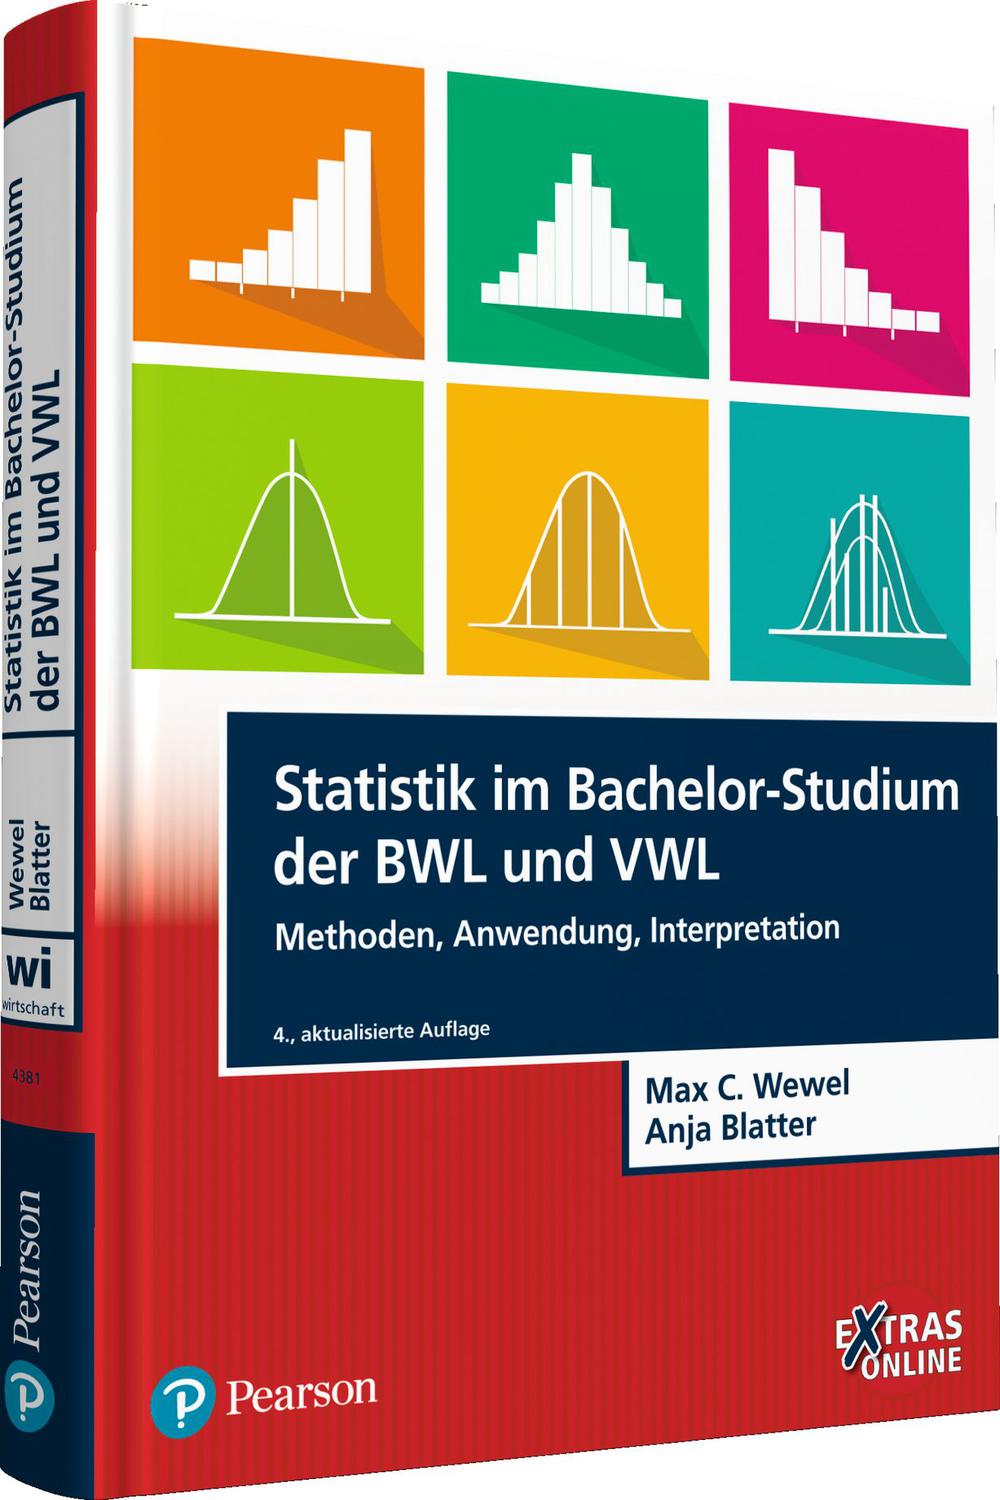 Statistik im Bachelor-Studium der BWL und VWL - Max C. Wewel, Anja Blatter,,